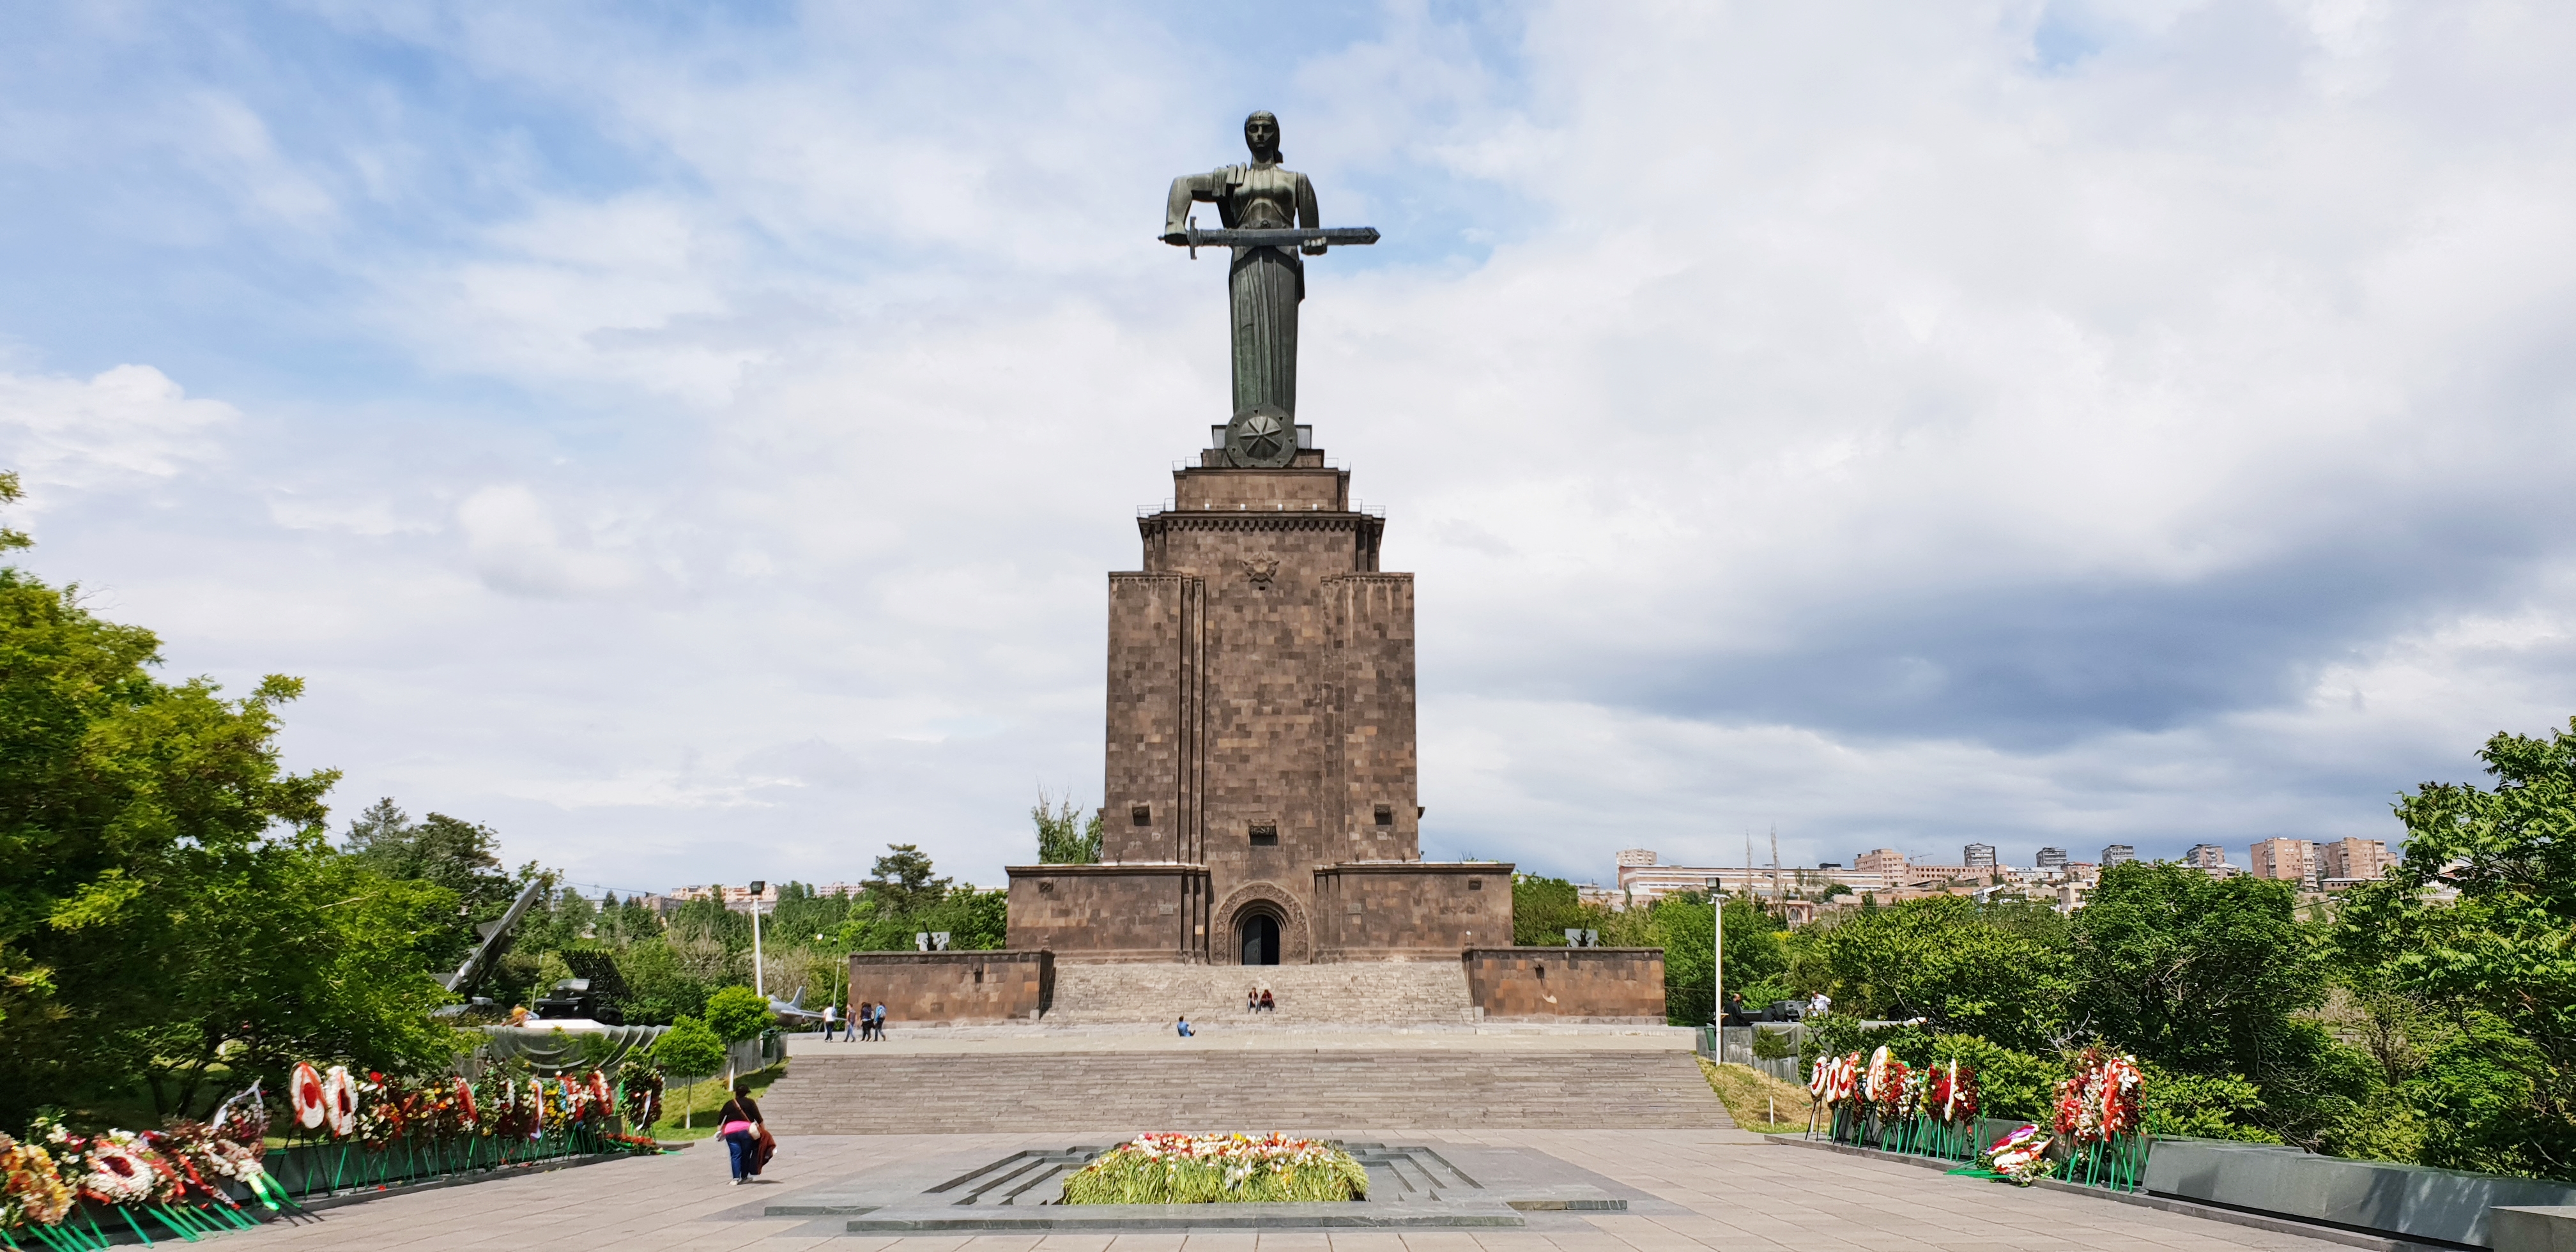 The Mother Armenia statue symbolises peace through strength & courage